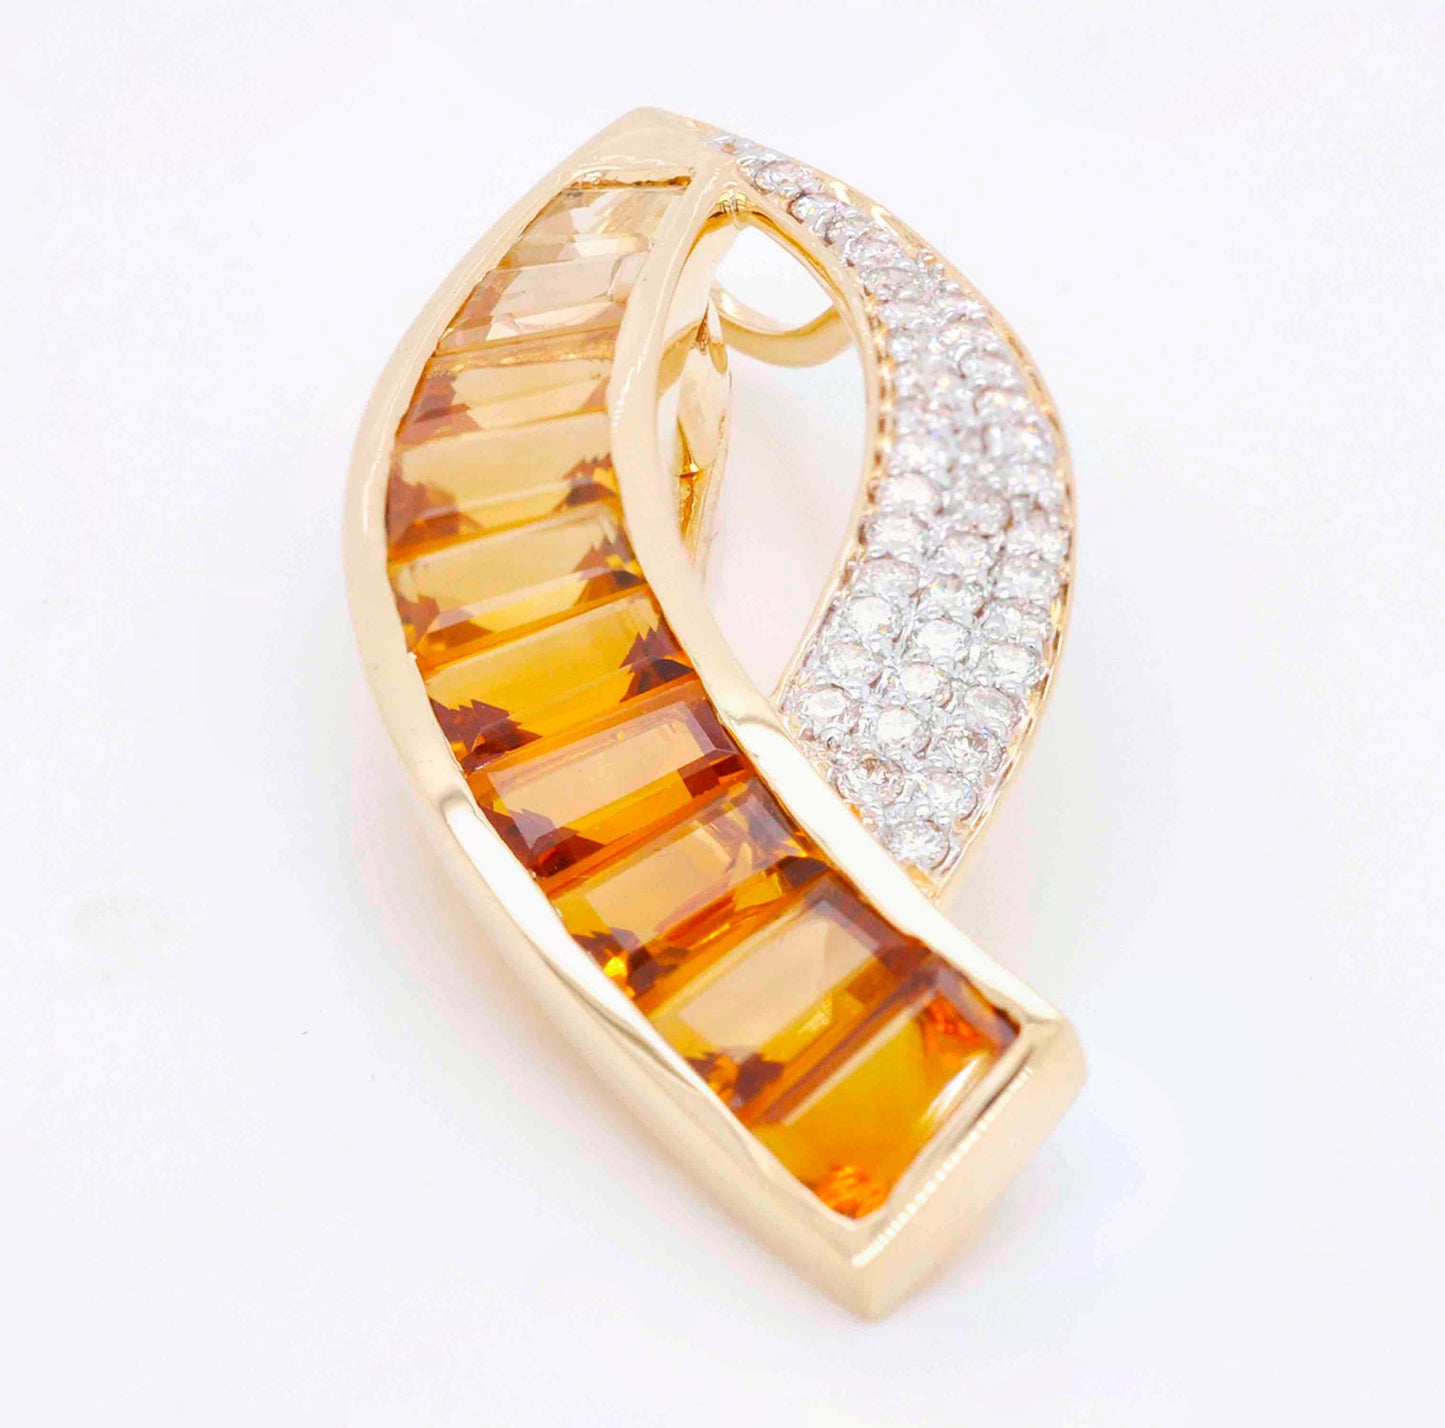 18k Gold Citrine Baguette Diamond Sword Pendant Brooch - Vaibhav Dhadda Jewelry